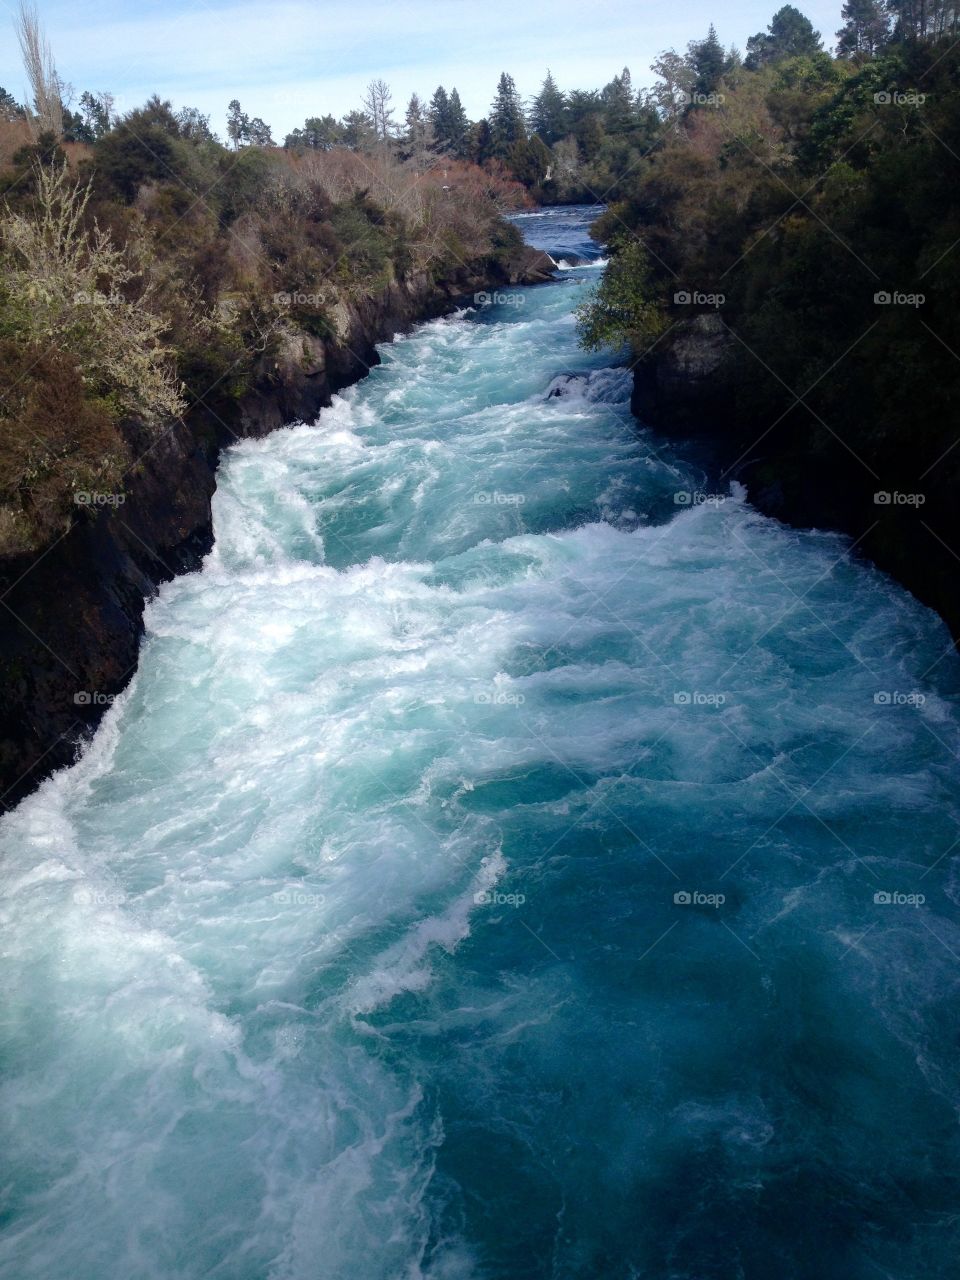 Huka falls New Zealand 